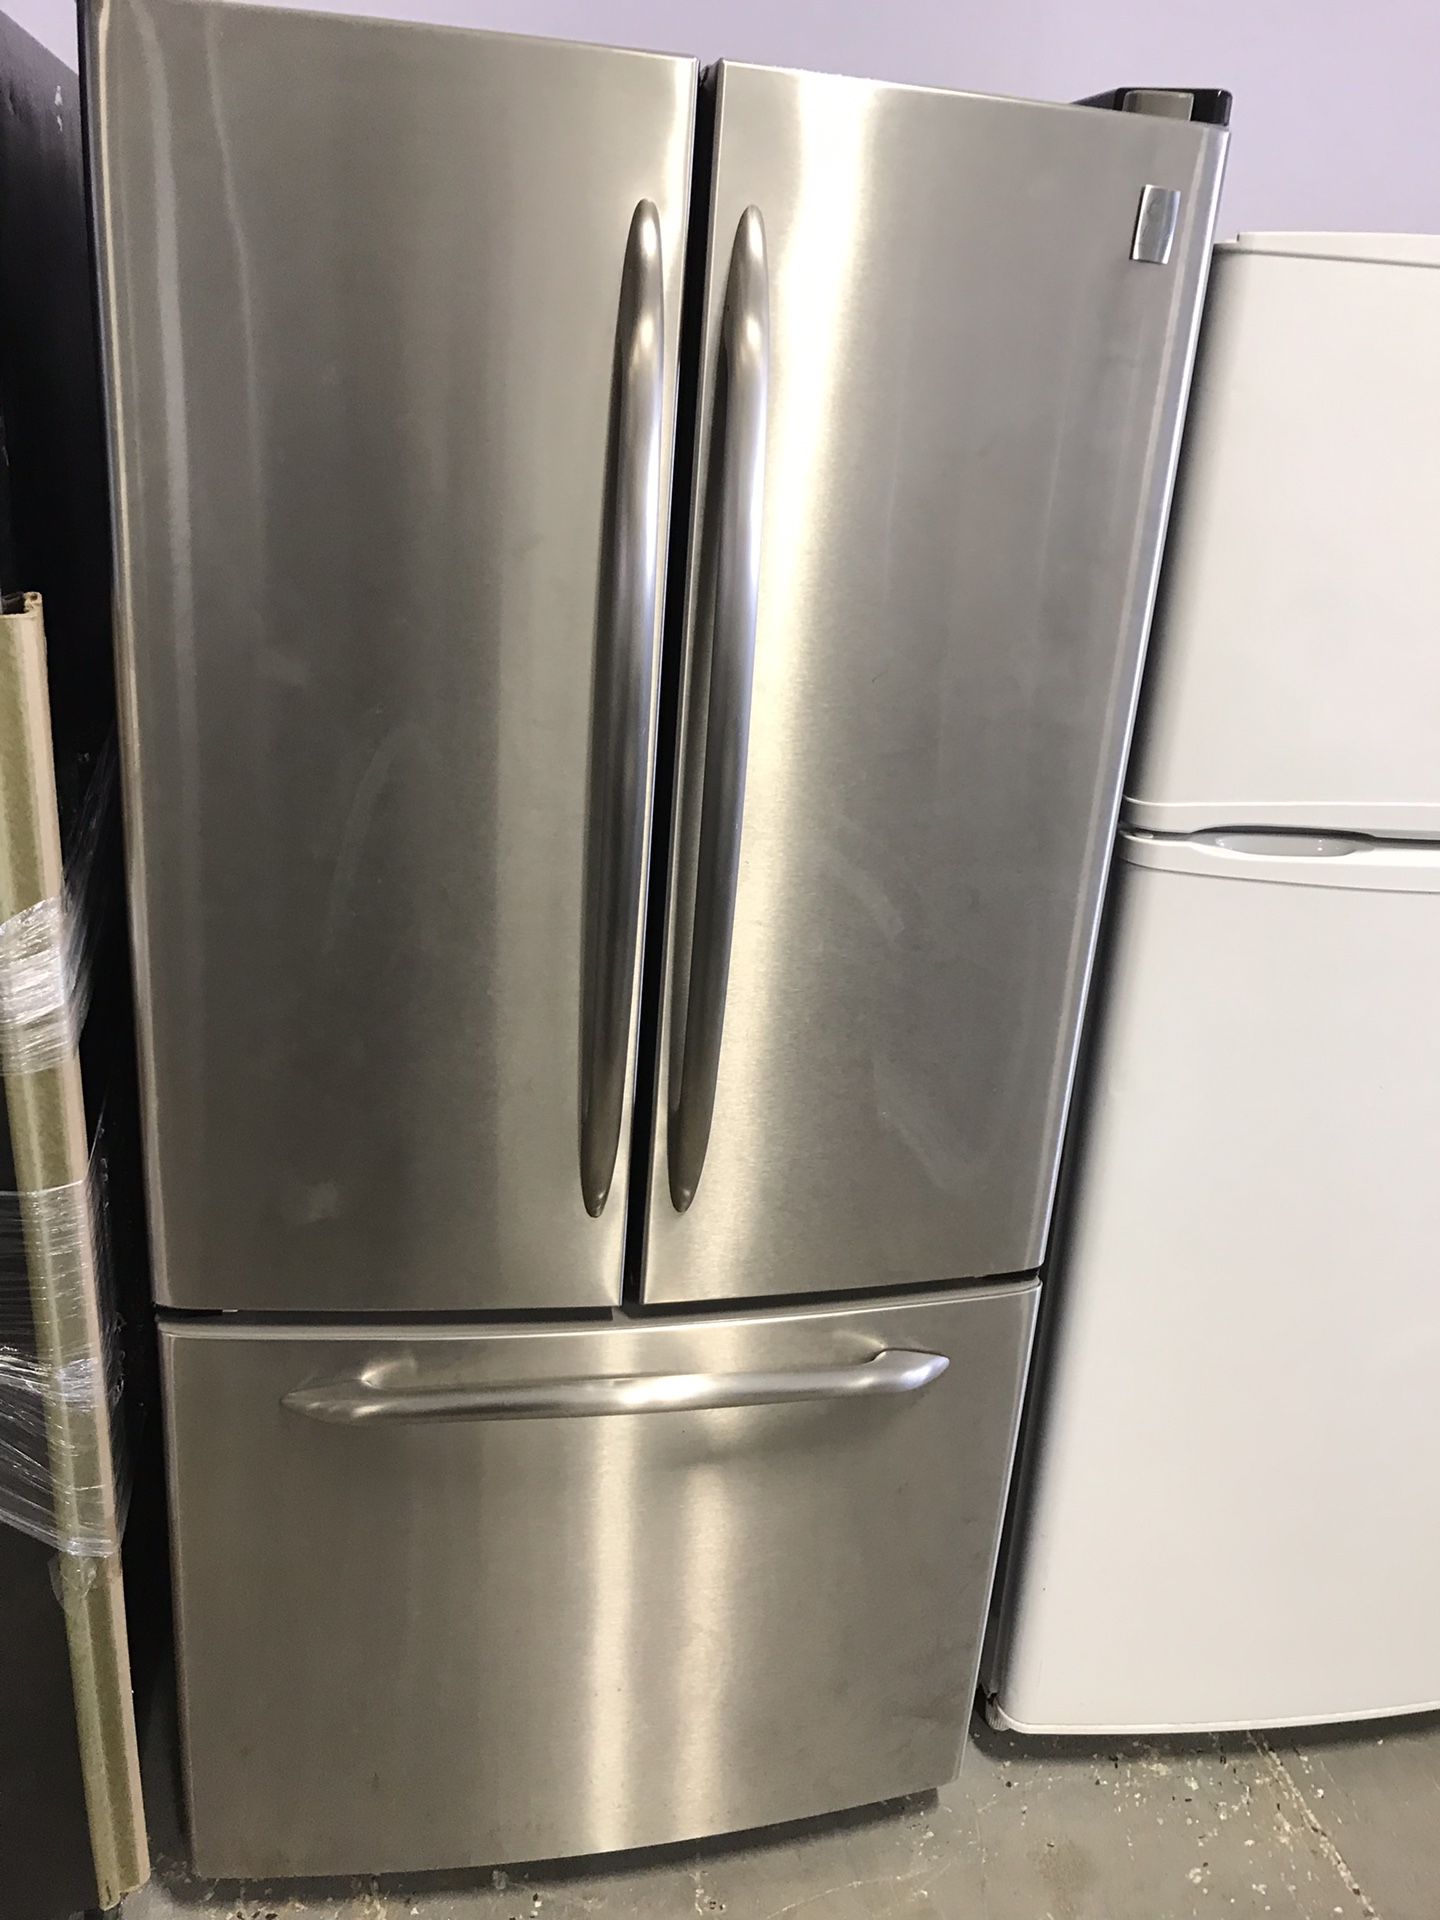 Ge profile refurbished stainless steel 36” French door refrigerator.